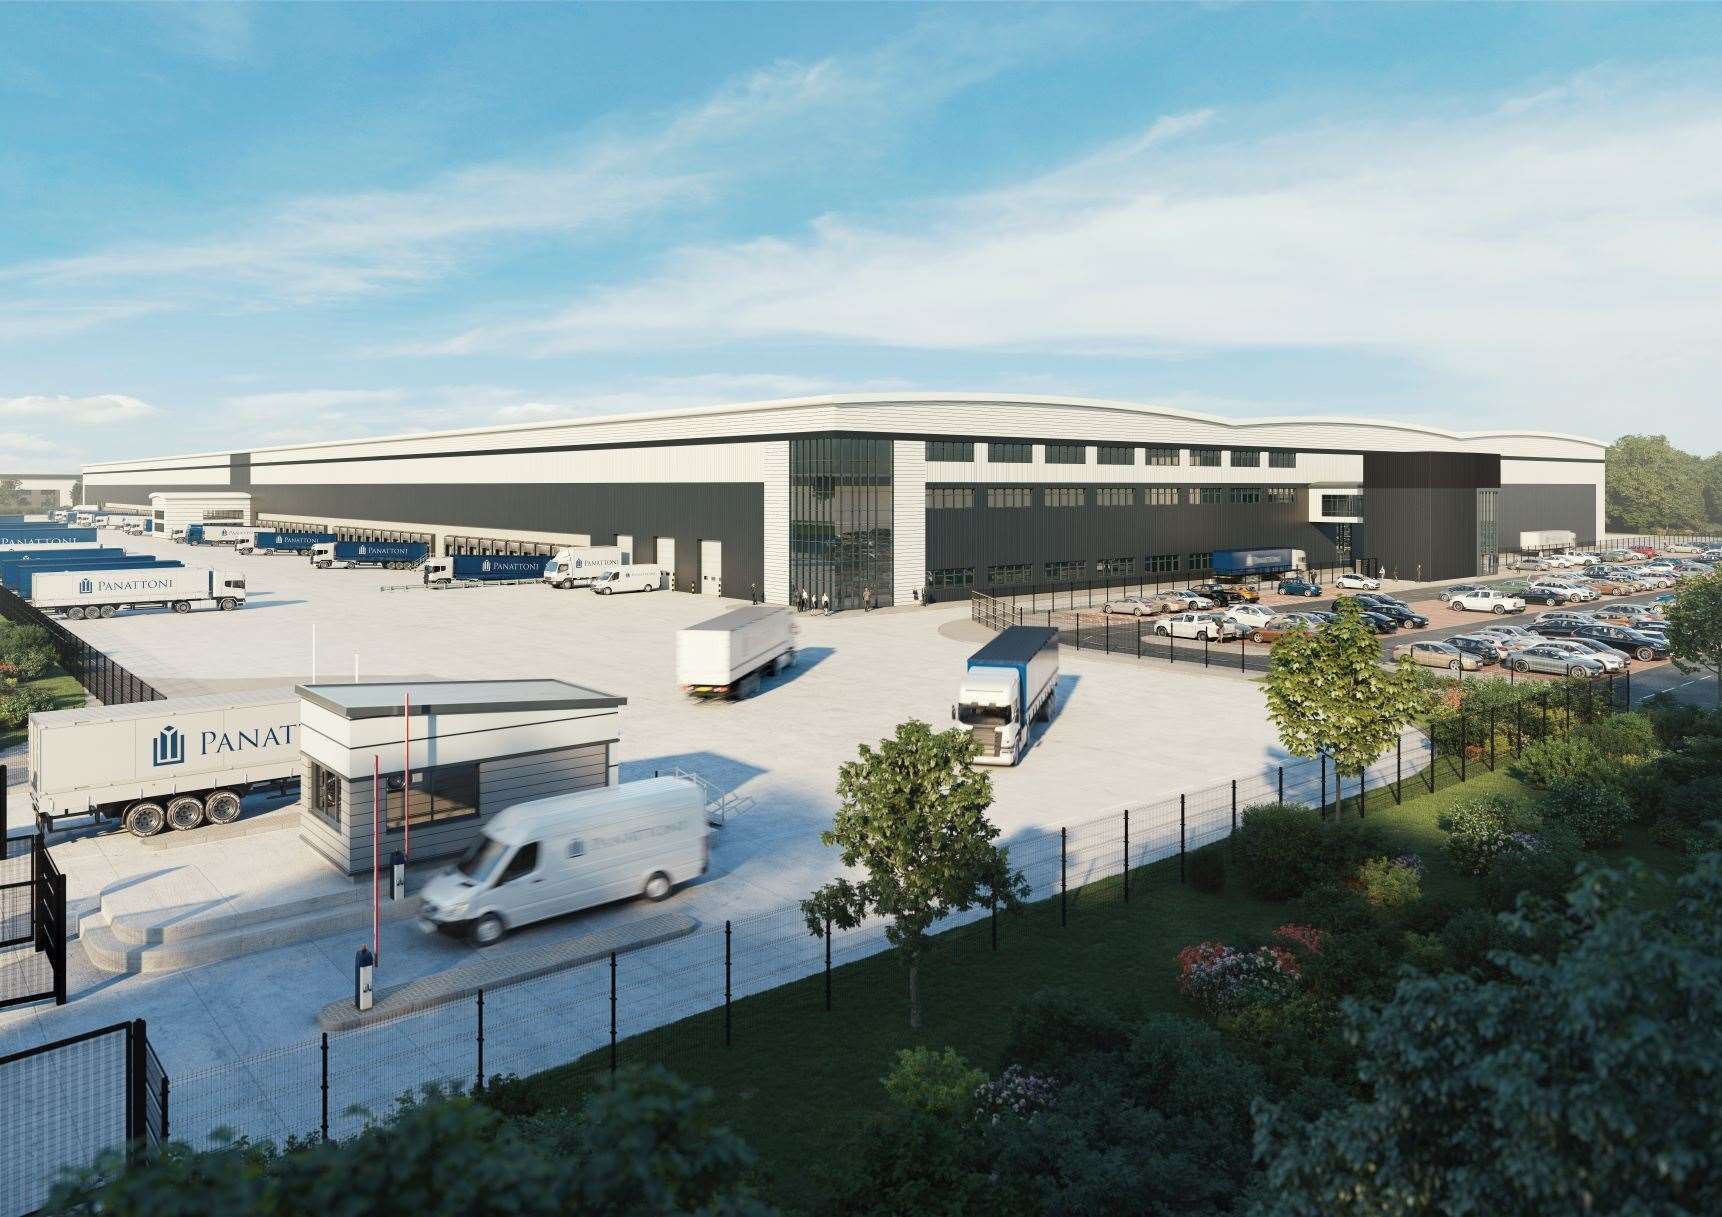 A CGI image of the proposed new warehouse at Panattoni Park